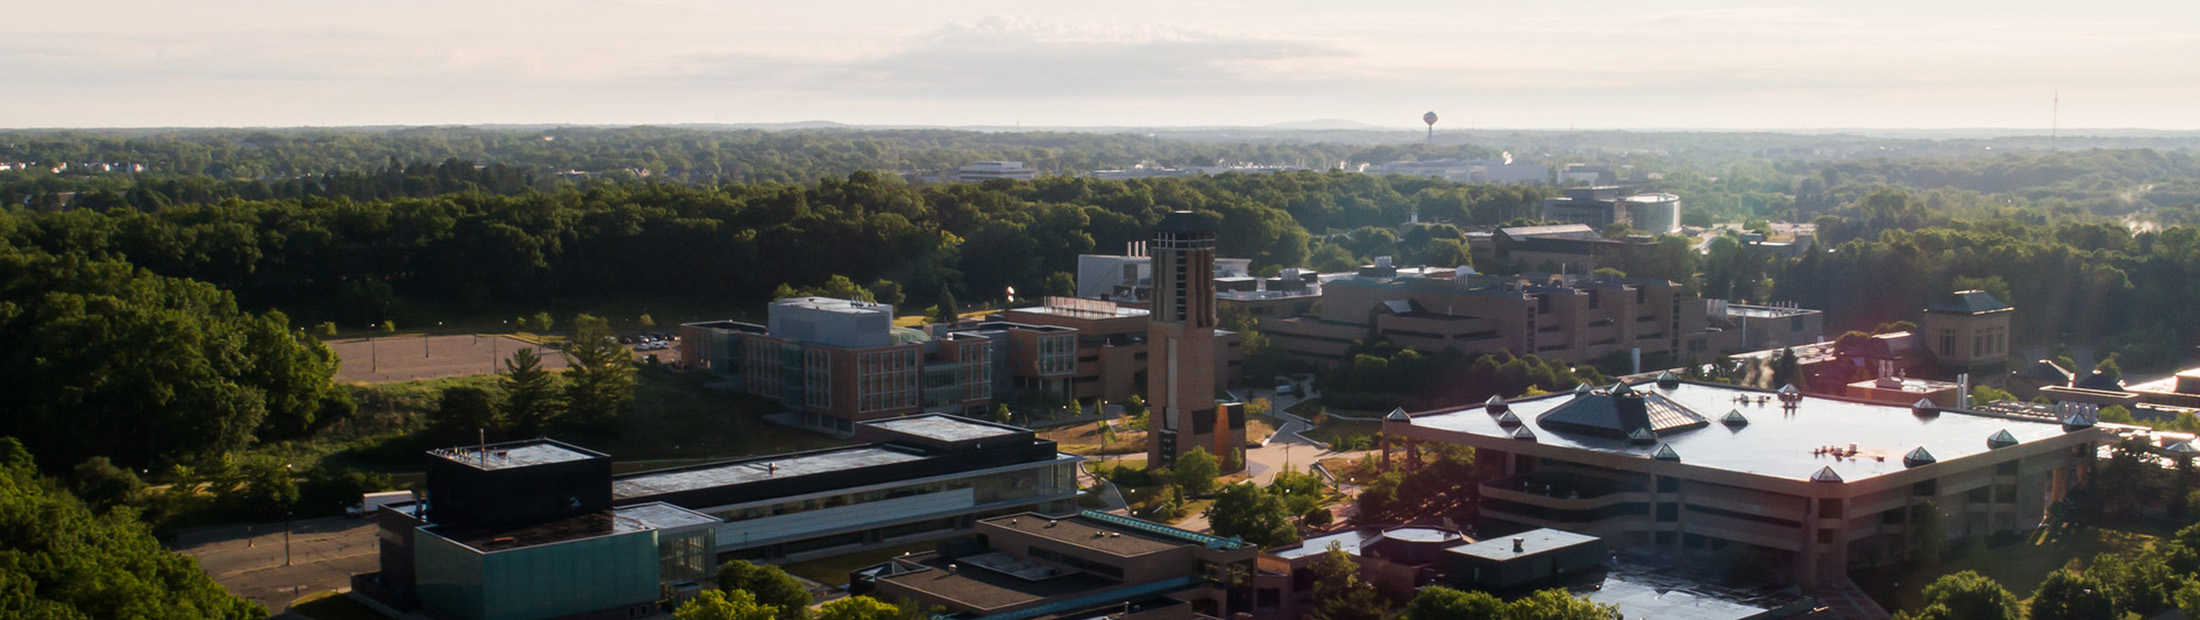 Featured aerial image of North Campus